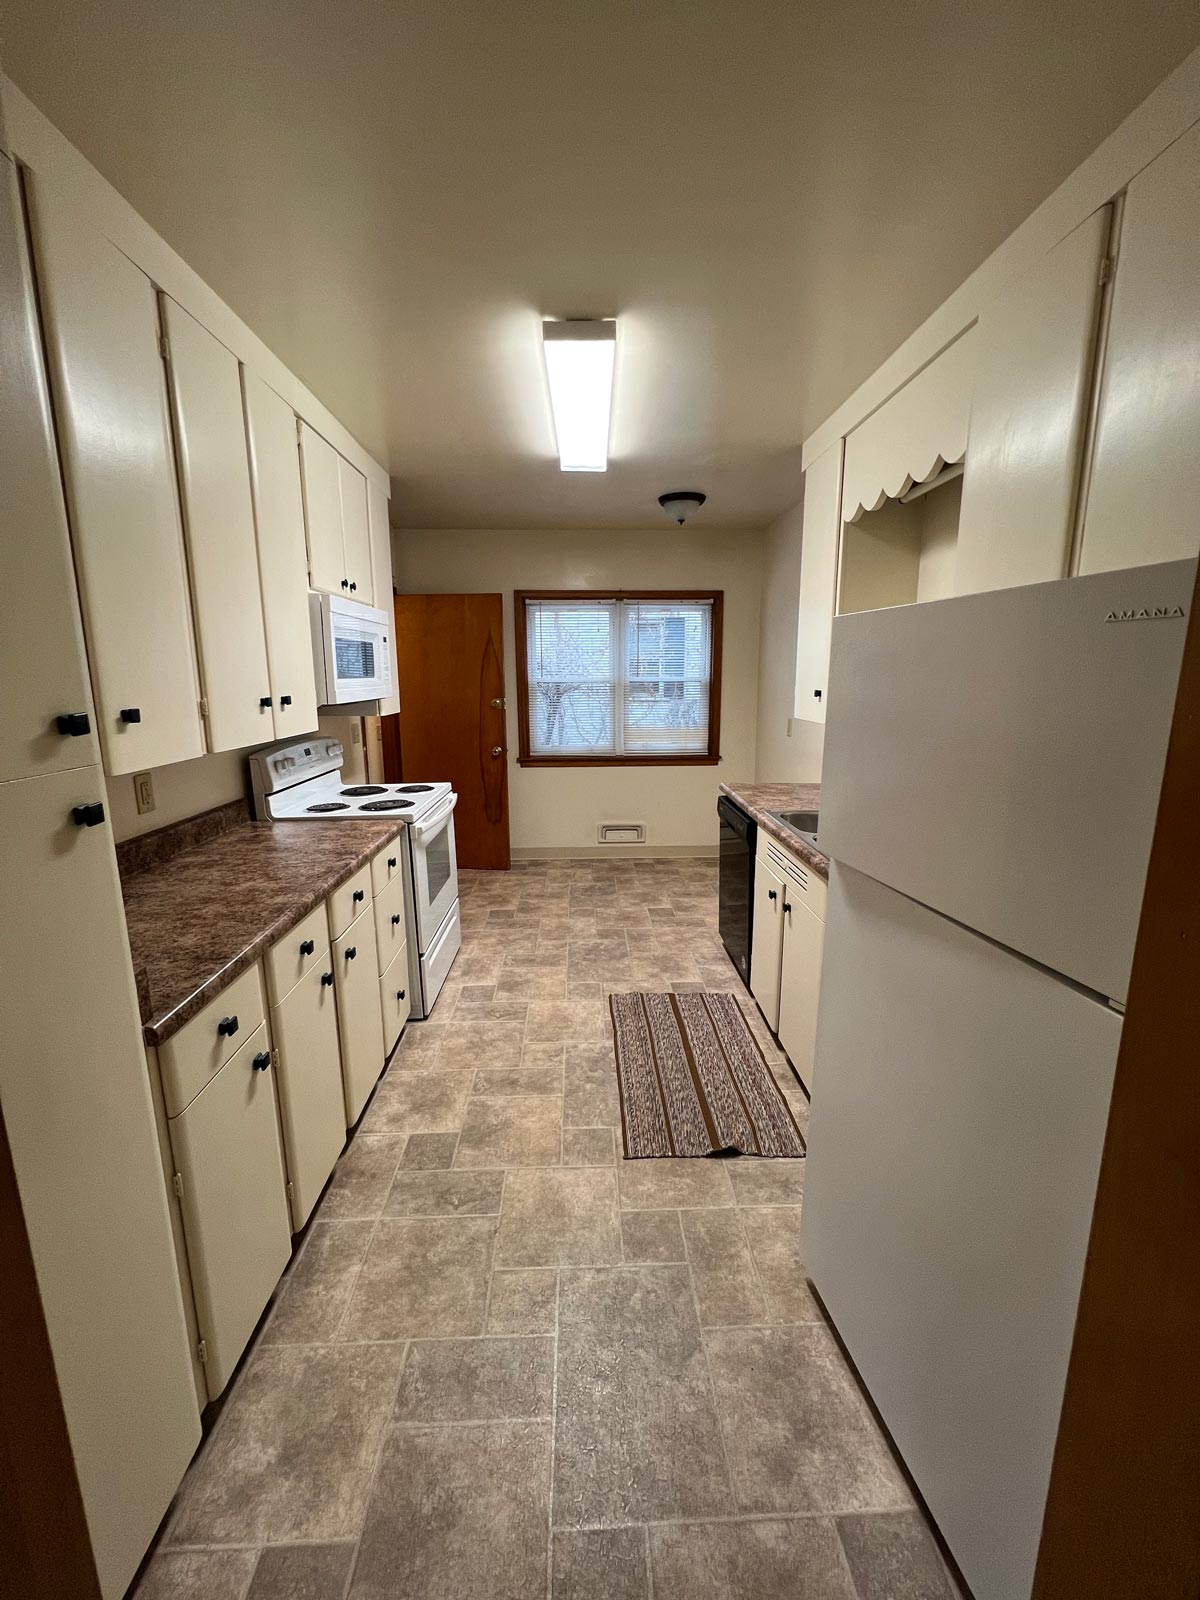 539 59th street apartment Interior - kitchen